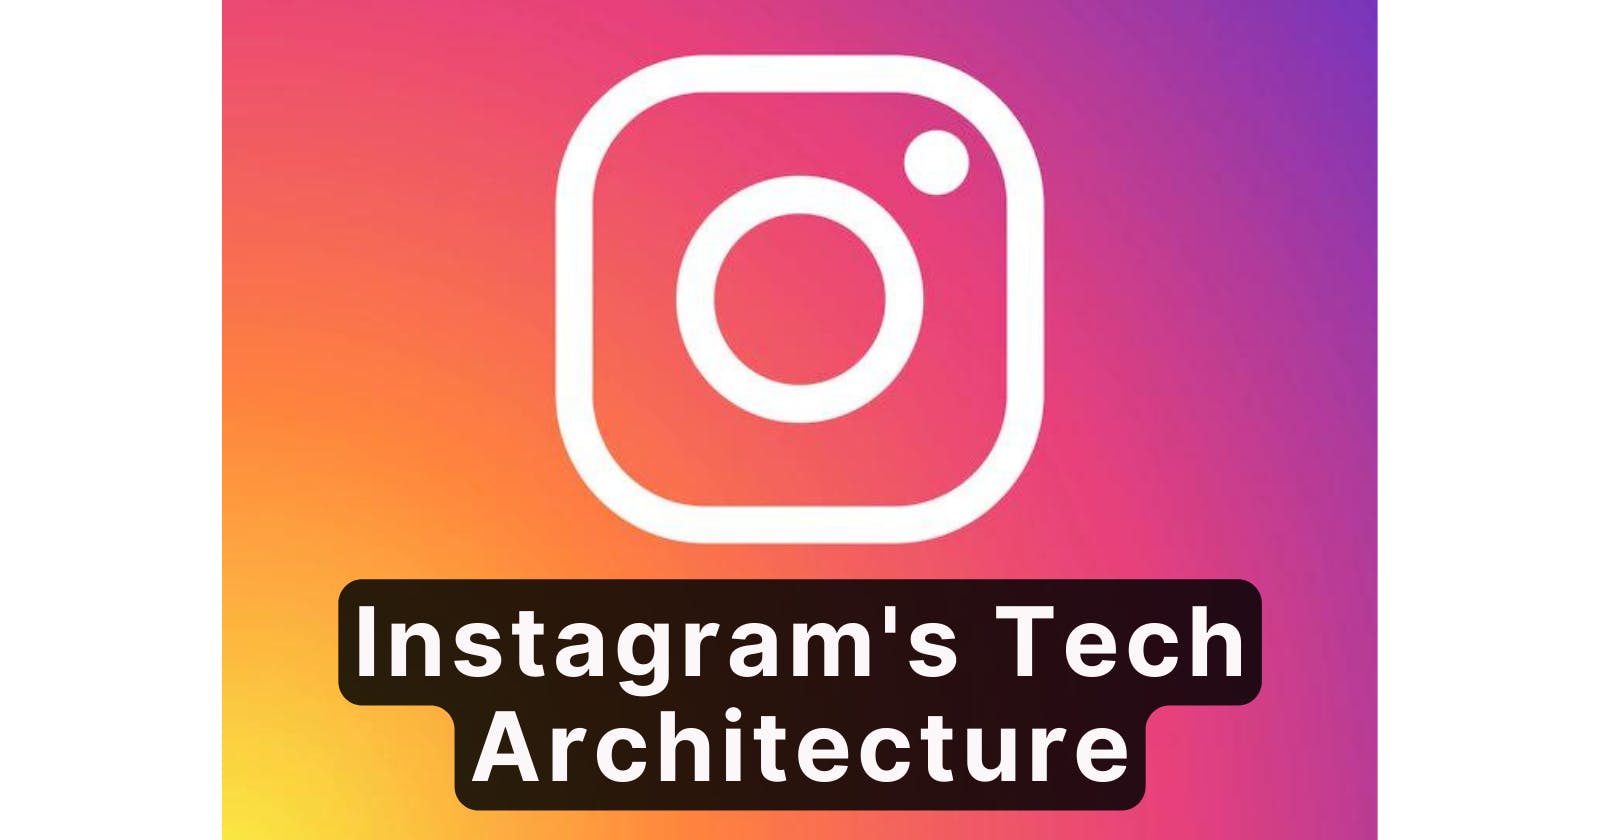 Instagram's Tech architecture